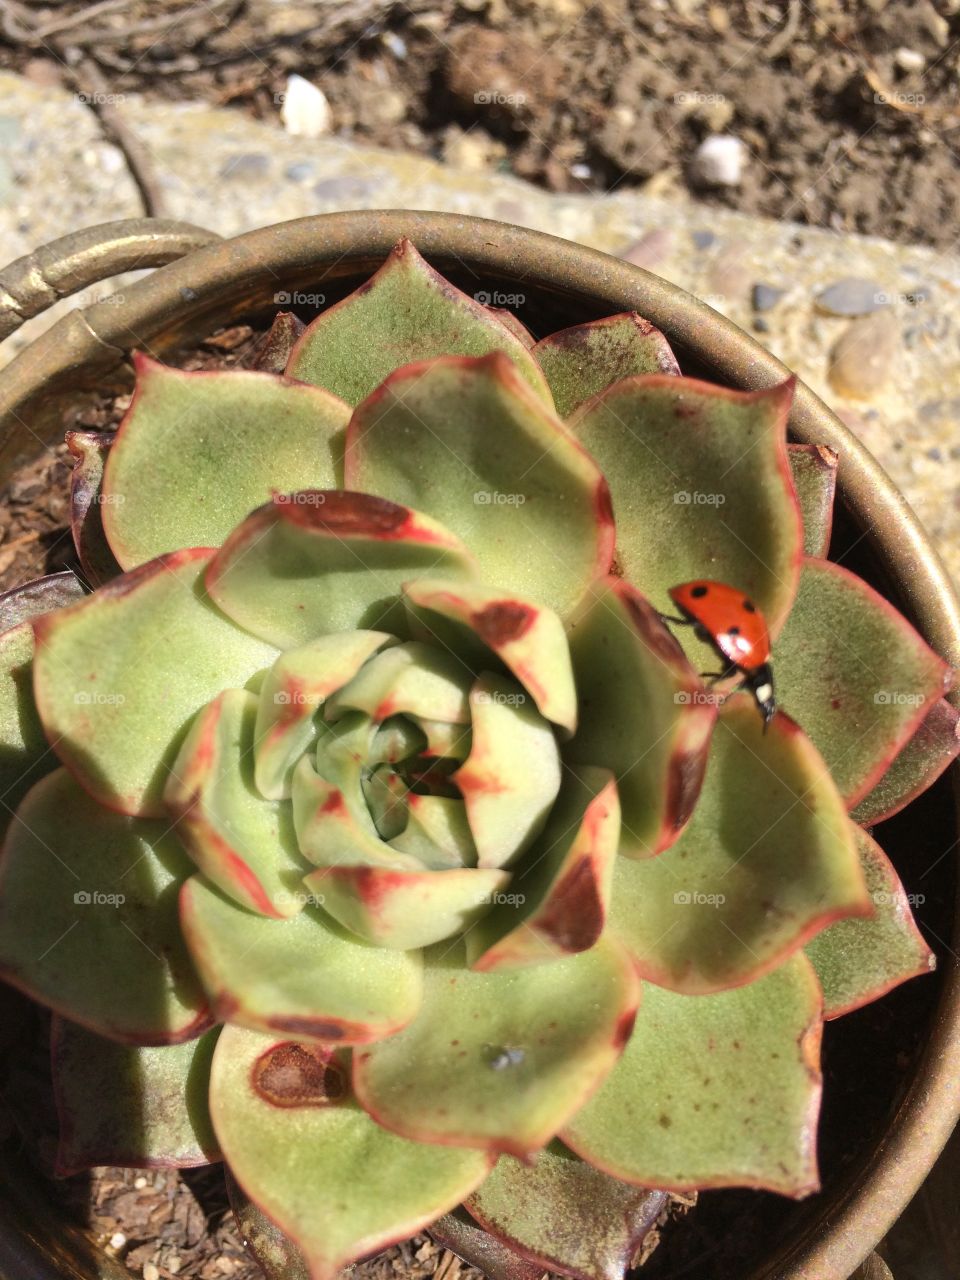 Ladybug on Succulent. Lady bug explores the edges of a plant